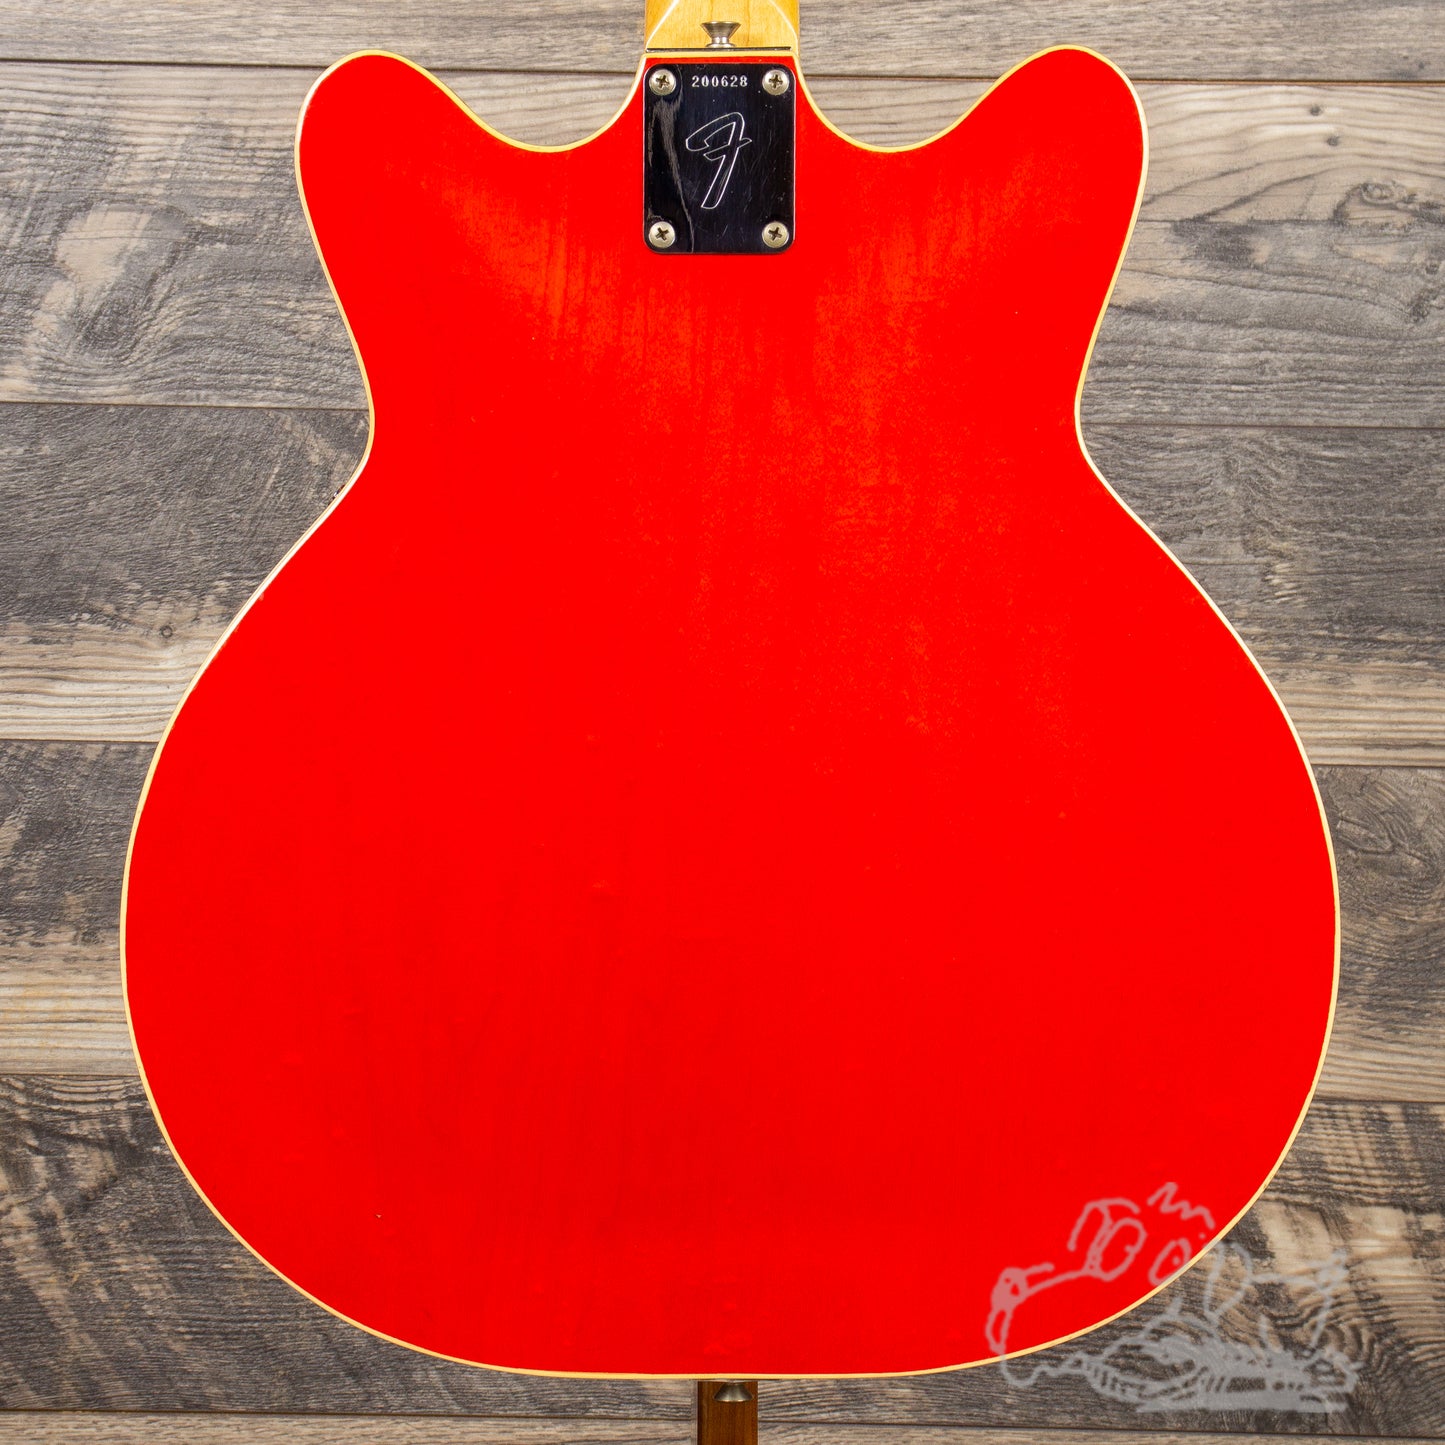 1967 Fender Cornado II - Cherry Red